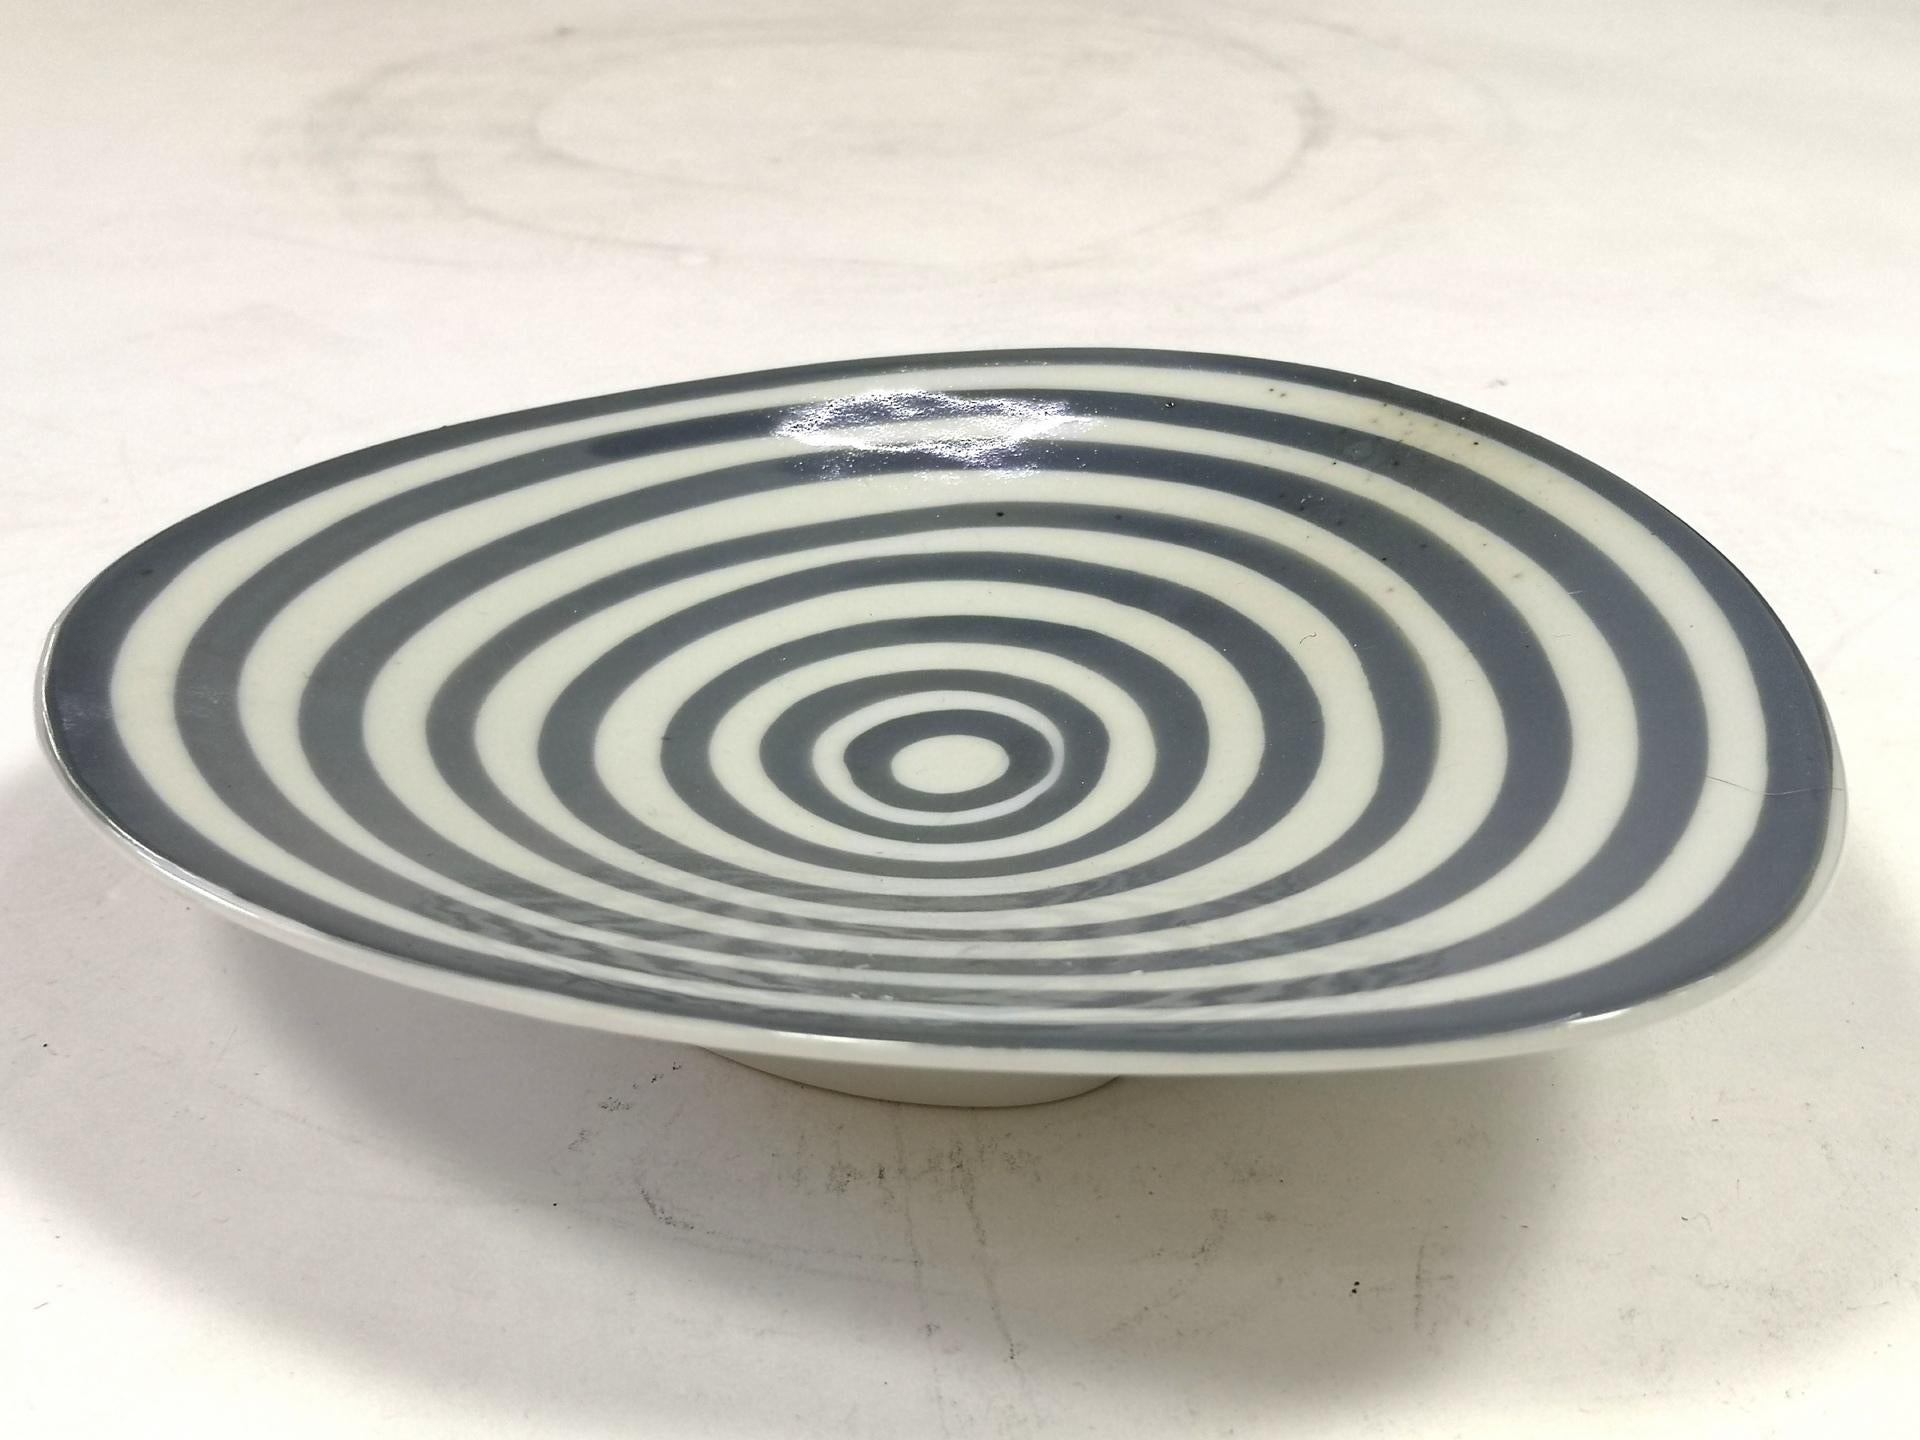 Royal Dux Czechoslovakian porcelain plate with swirly mid-century pattern, 1960s.